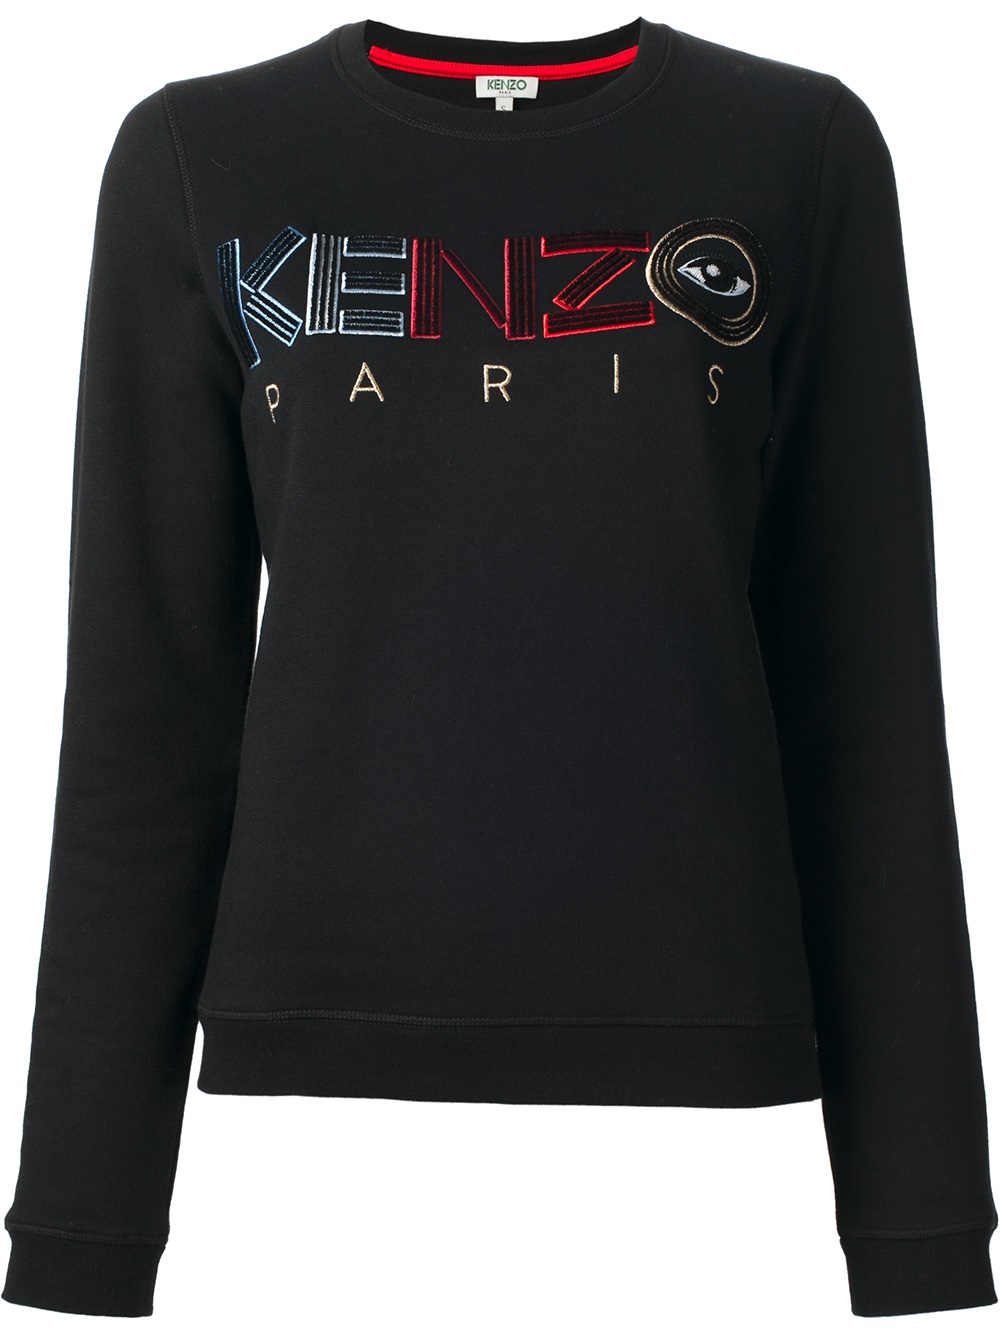 Lyst - Kenzo Embroidered Logo Sweatshirt in Black